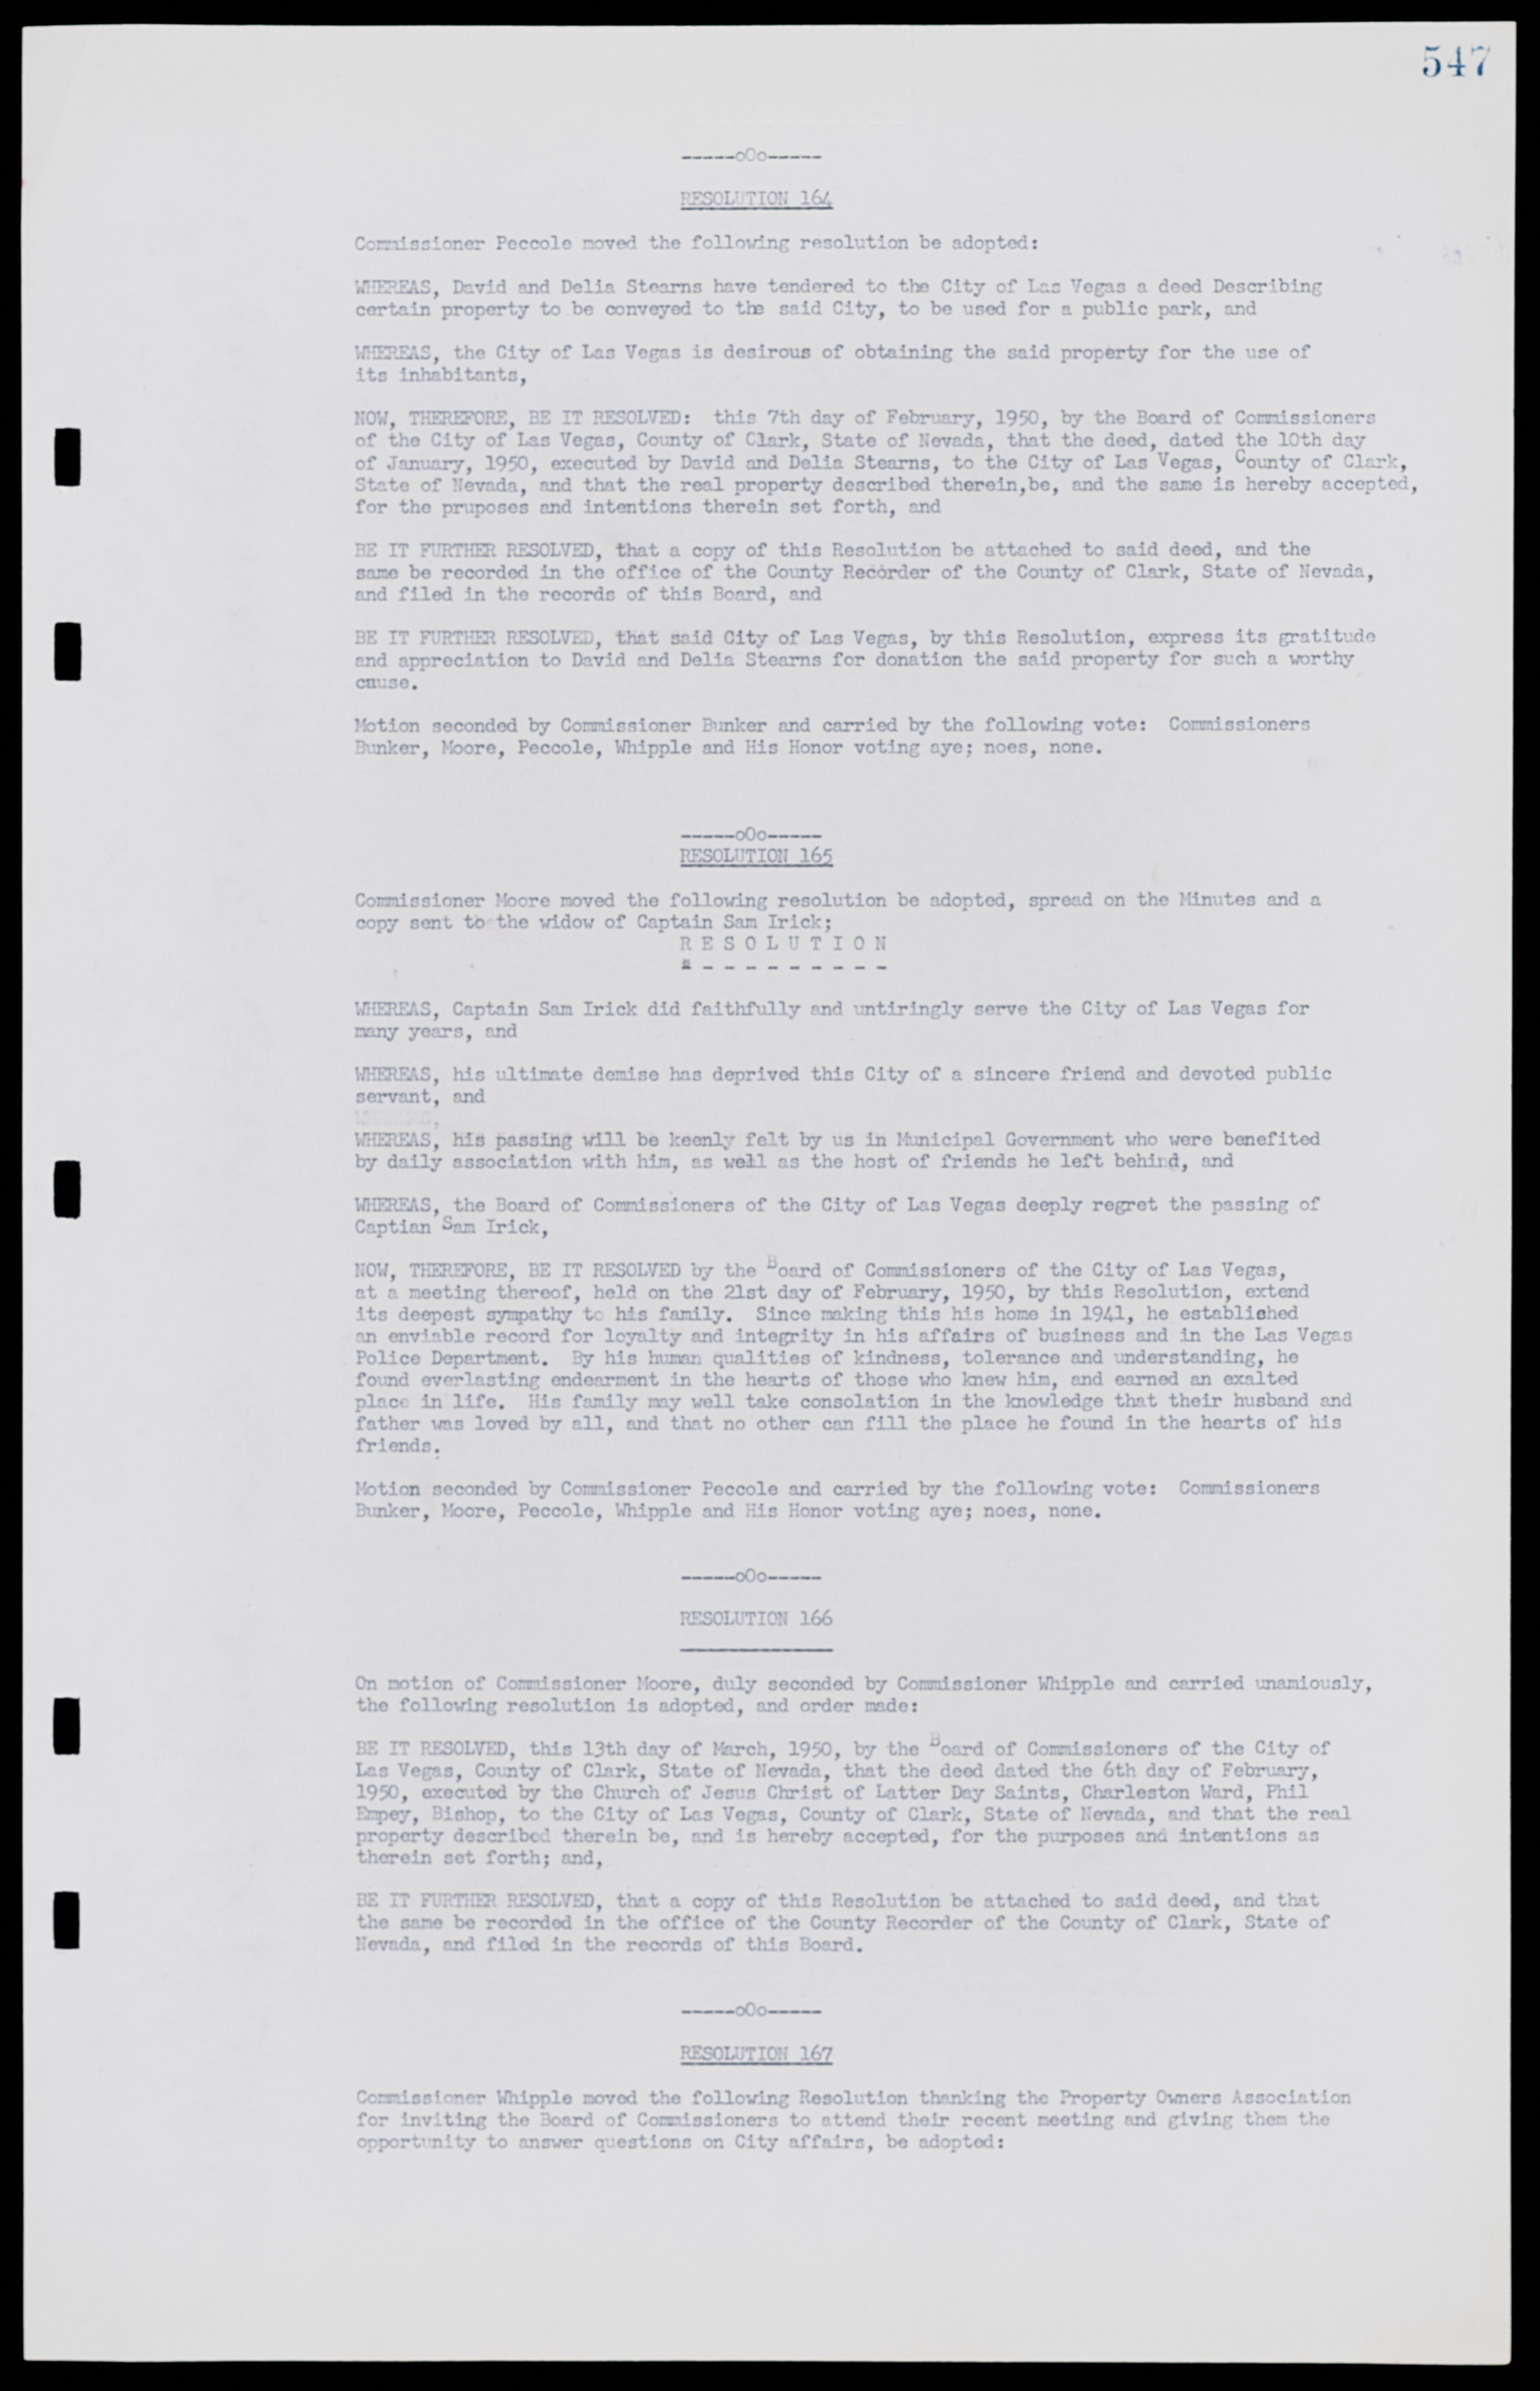 Las Vegas City Commission Minutes, January 7, 1947 to October 26, 1949, lvc000006-577